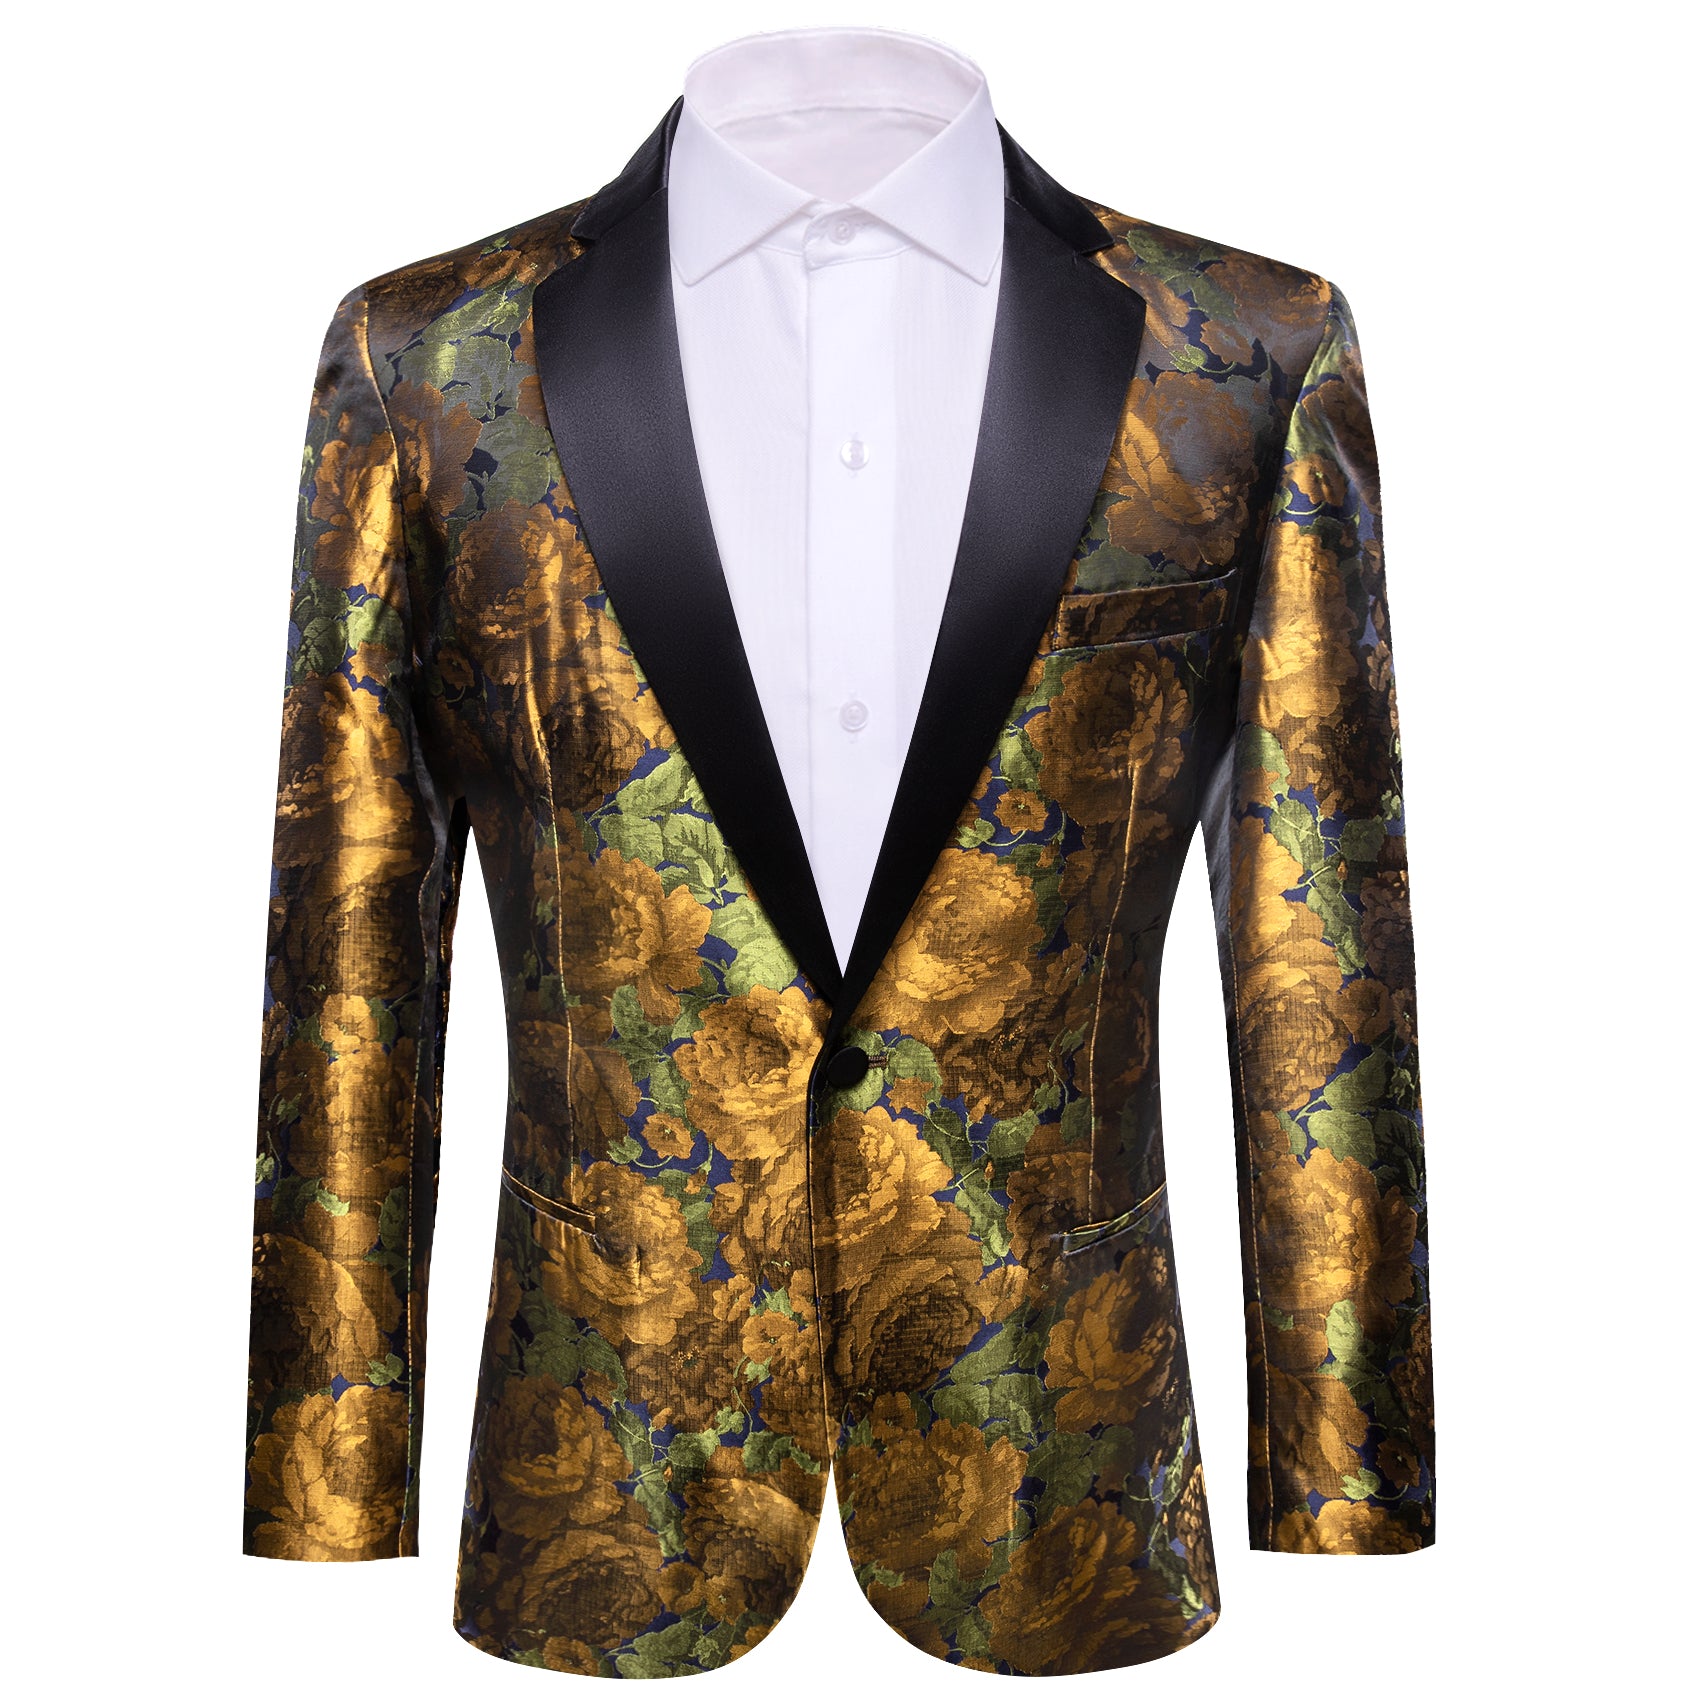 Barry.wang Men's Suit Gold Green Flower Notched Collar Suit Jacket